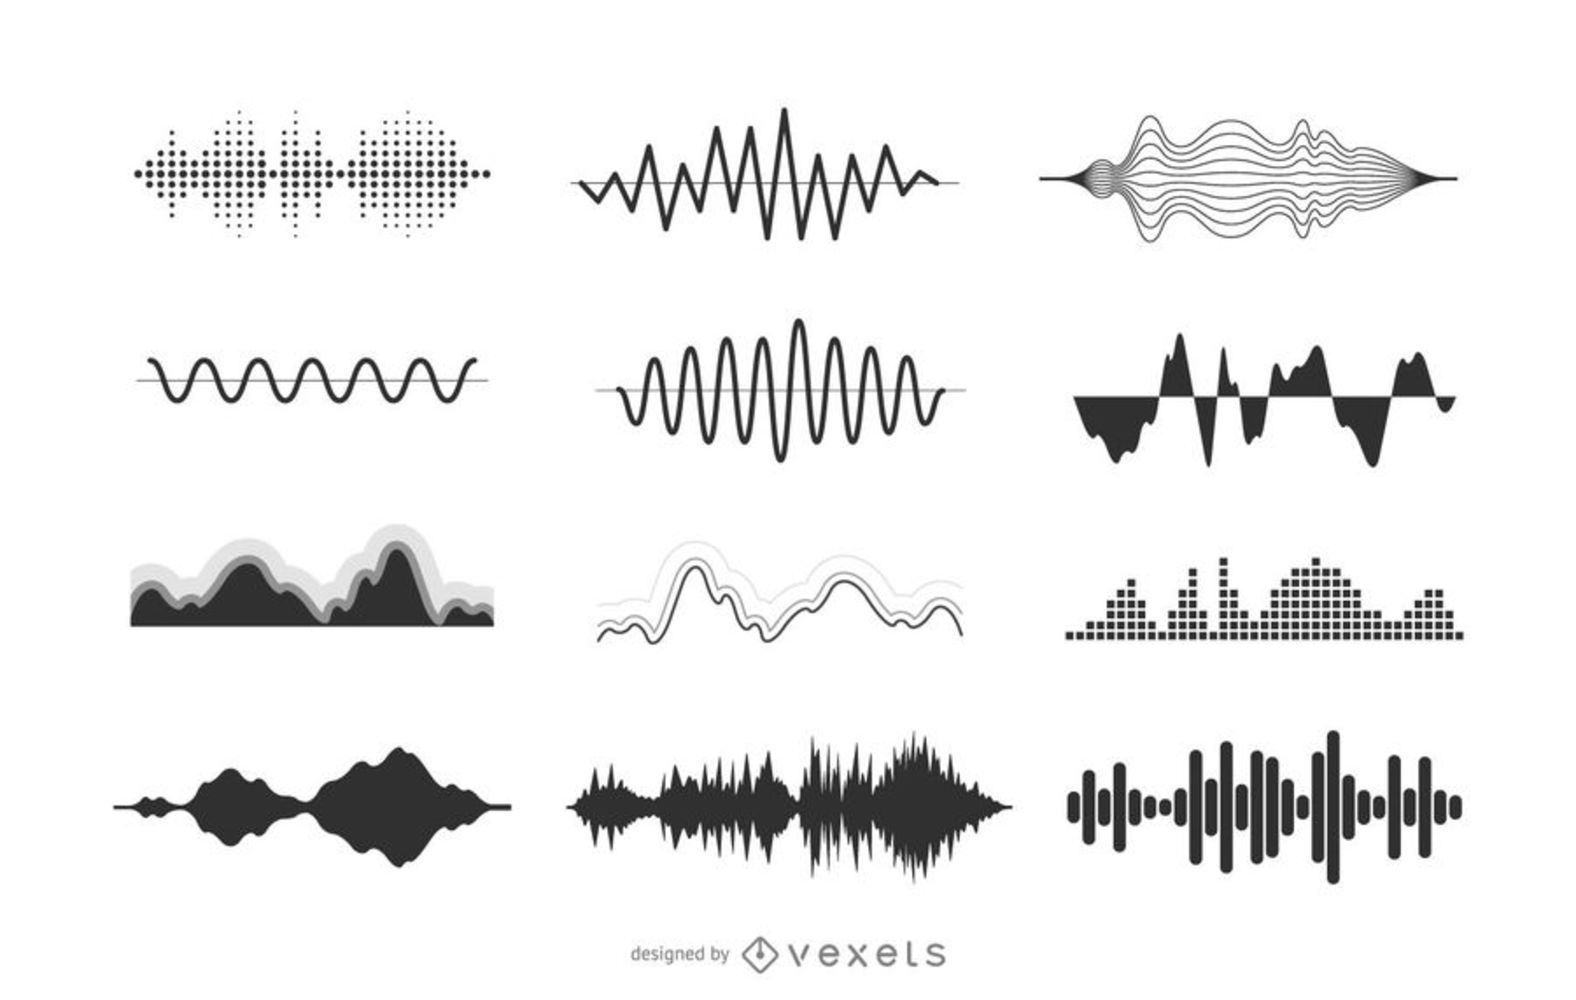 43de34cdf8520fee4d5a02730ff4fd8b sound waves illustration collection.thumb